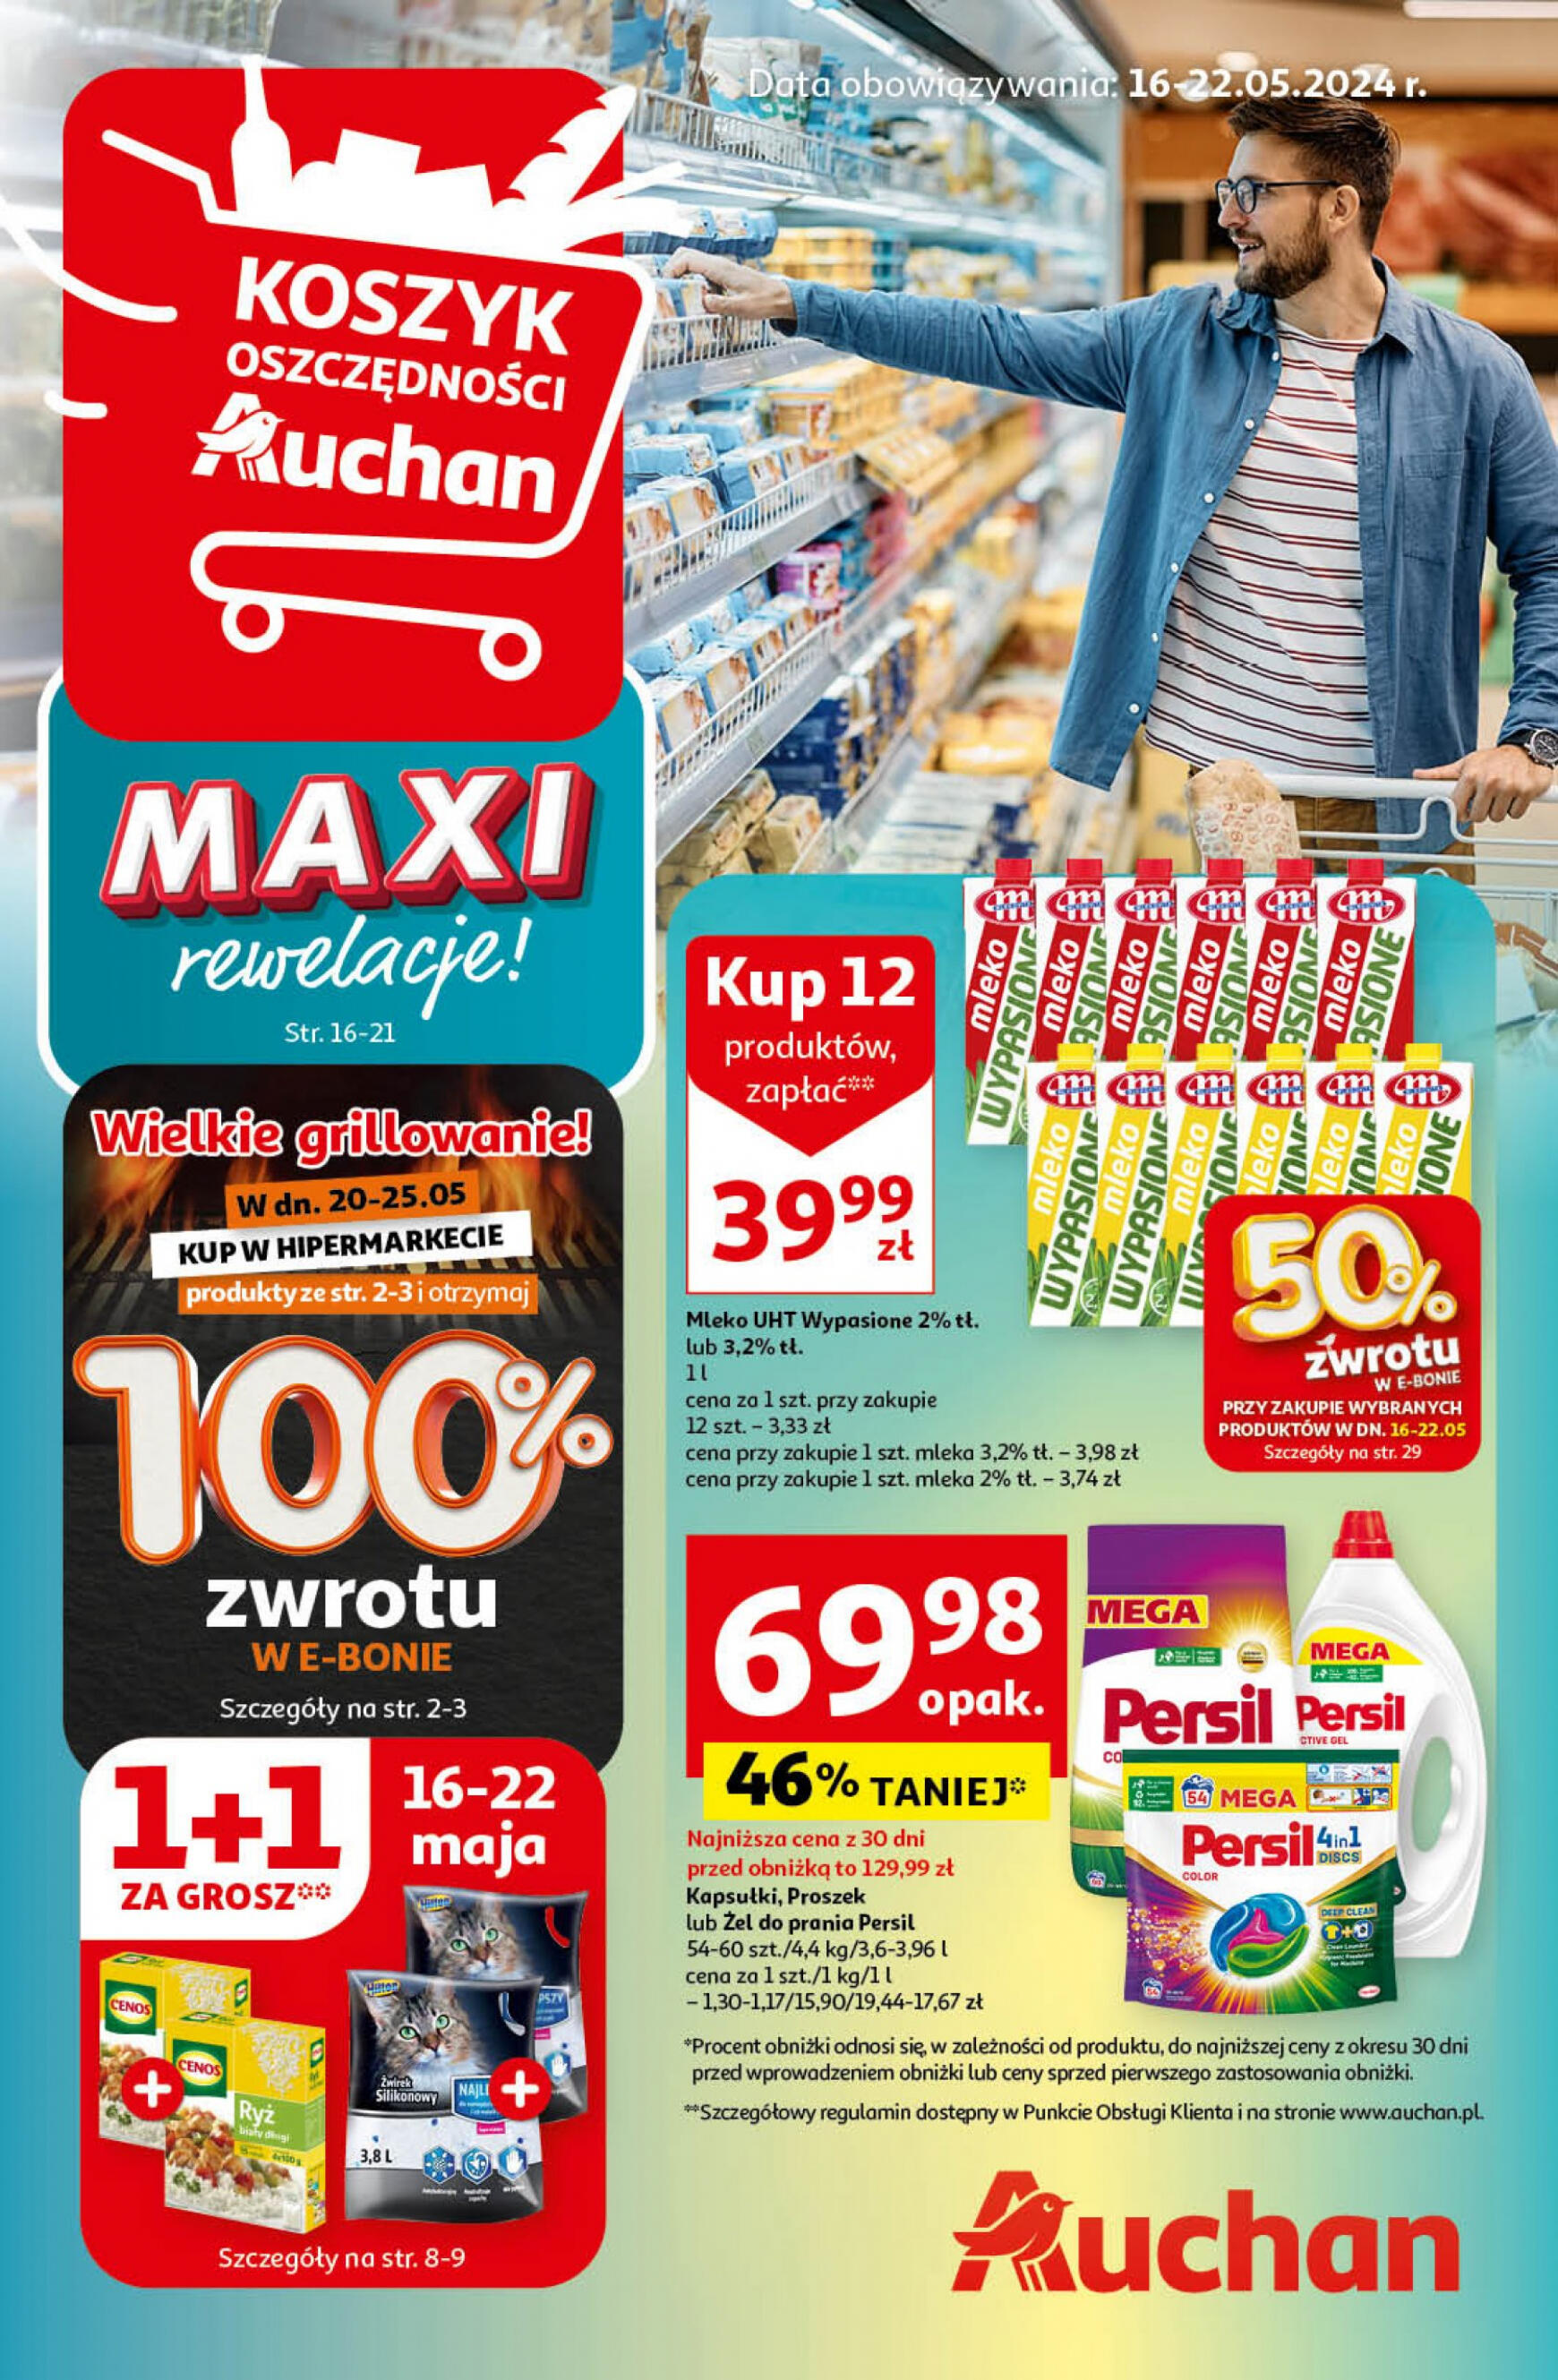 auchan - Auchan - Hipermarket gazetka aktualna ważna od 16.05. - 22.05.